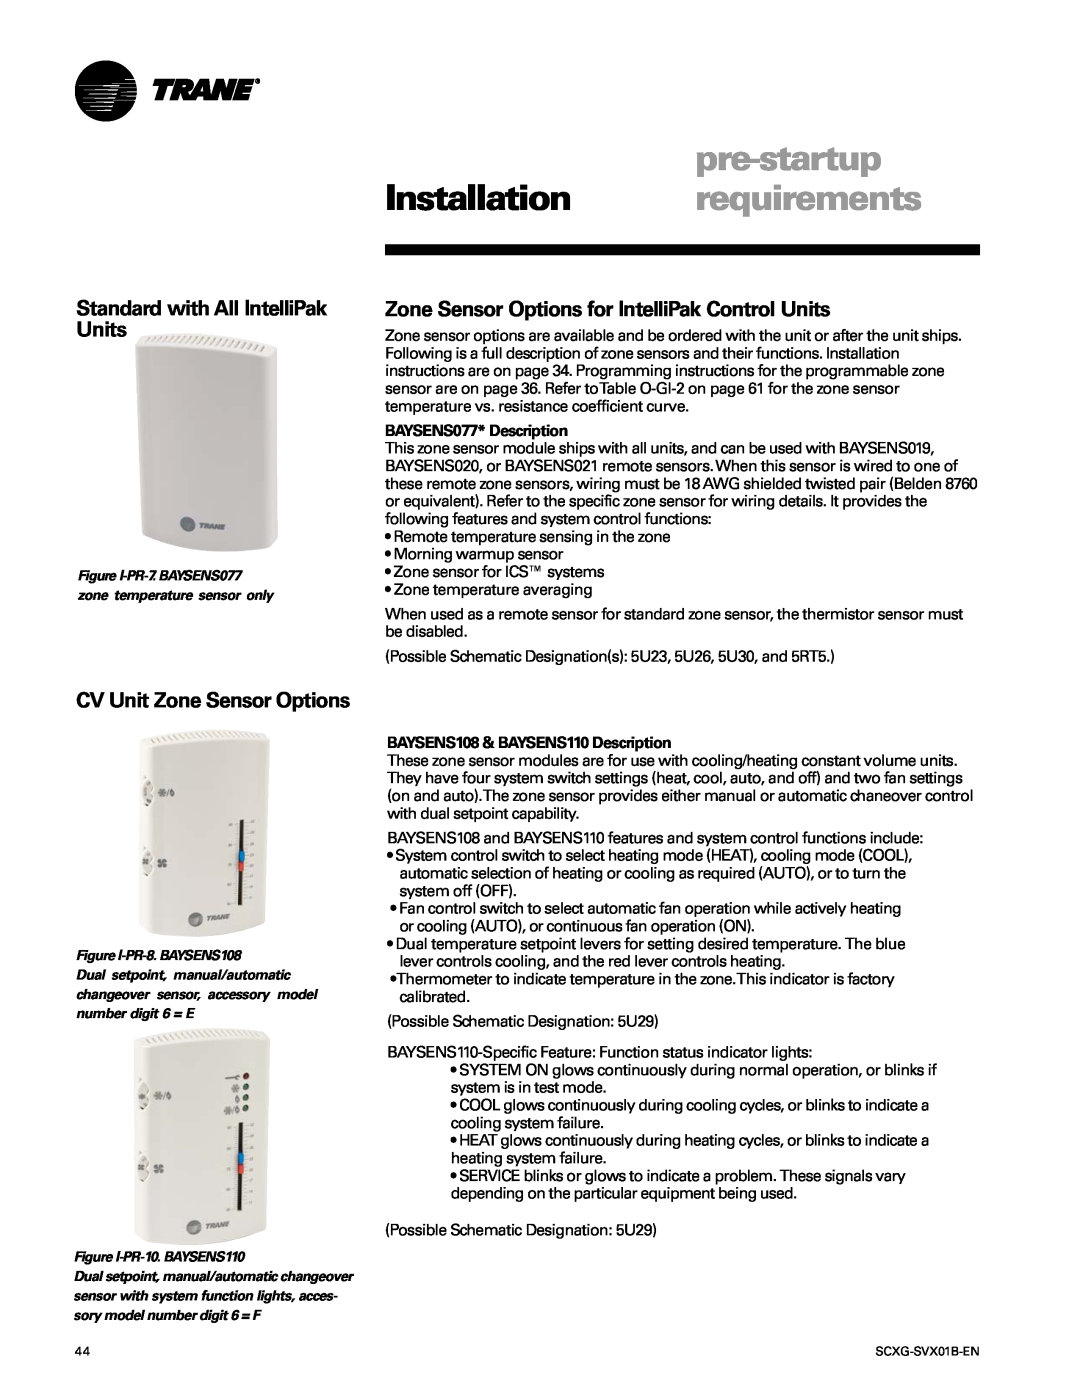 Trane SCXG-SVX01B-EN Standard with All IntelliPak Units, Zone Sensor Options for IntelliPak Control Units, pre-startup 